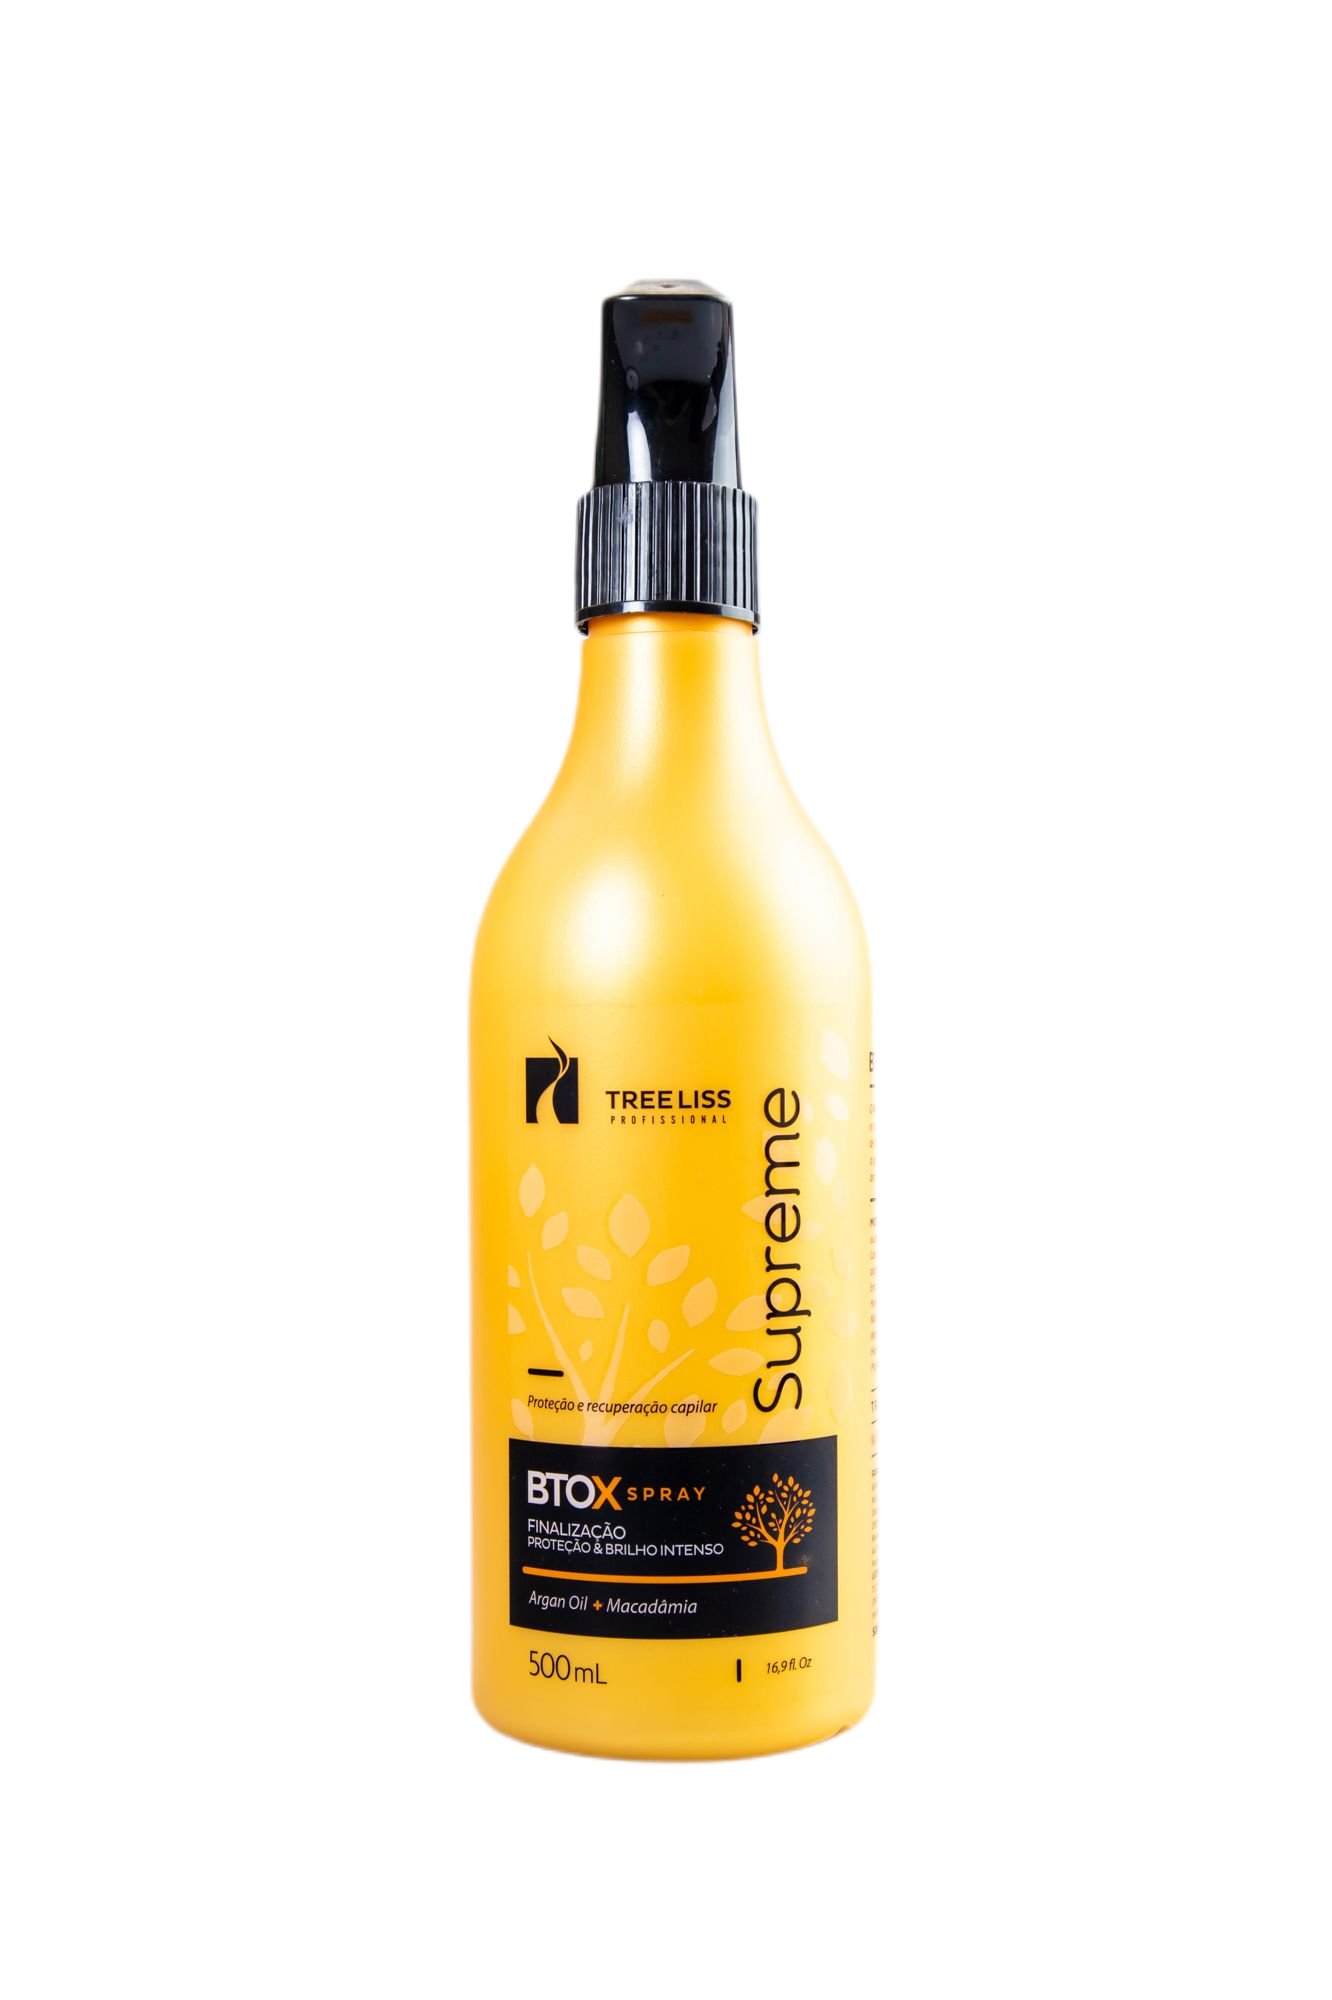 Tree Liss Brazilian Hair Treatment Supreme Btox Finisher Spray 500ml - Tree Liss